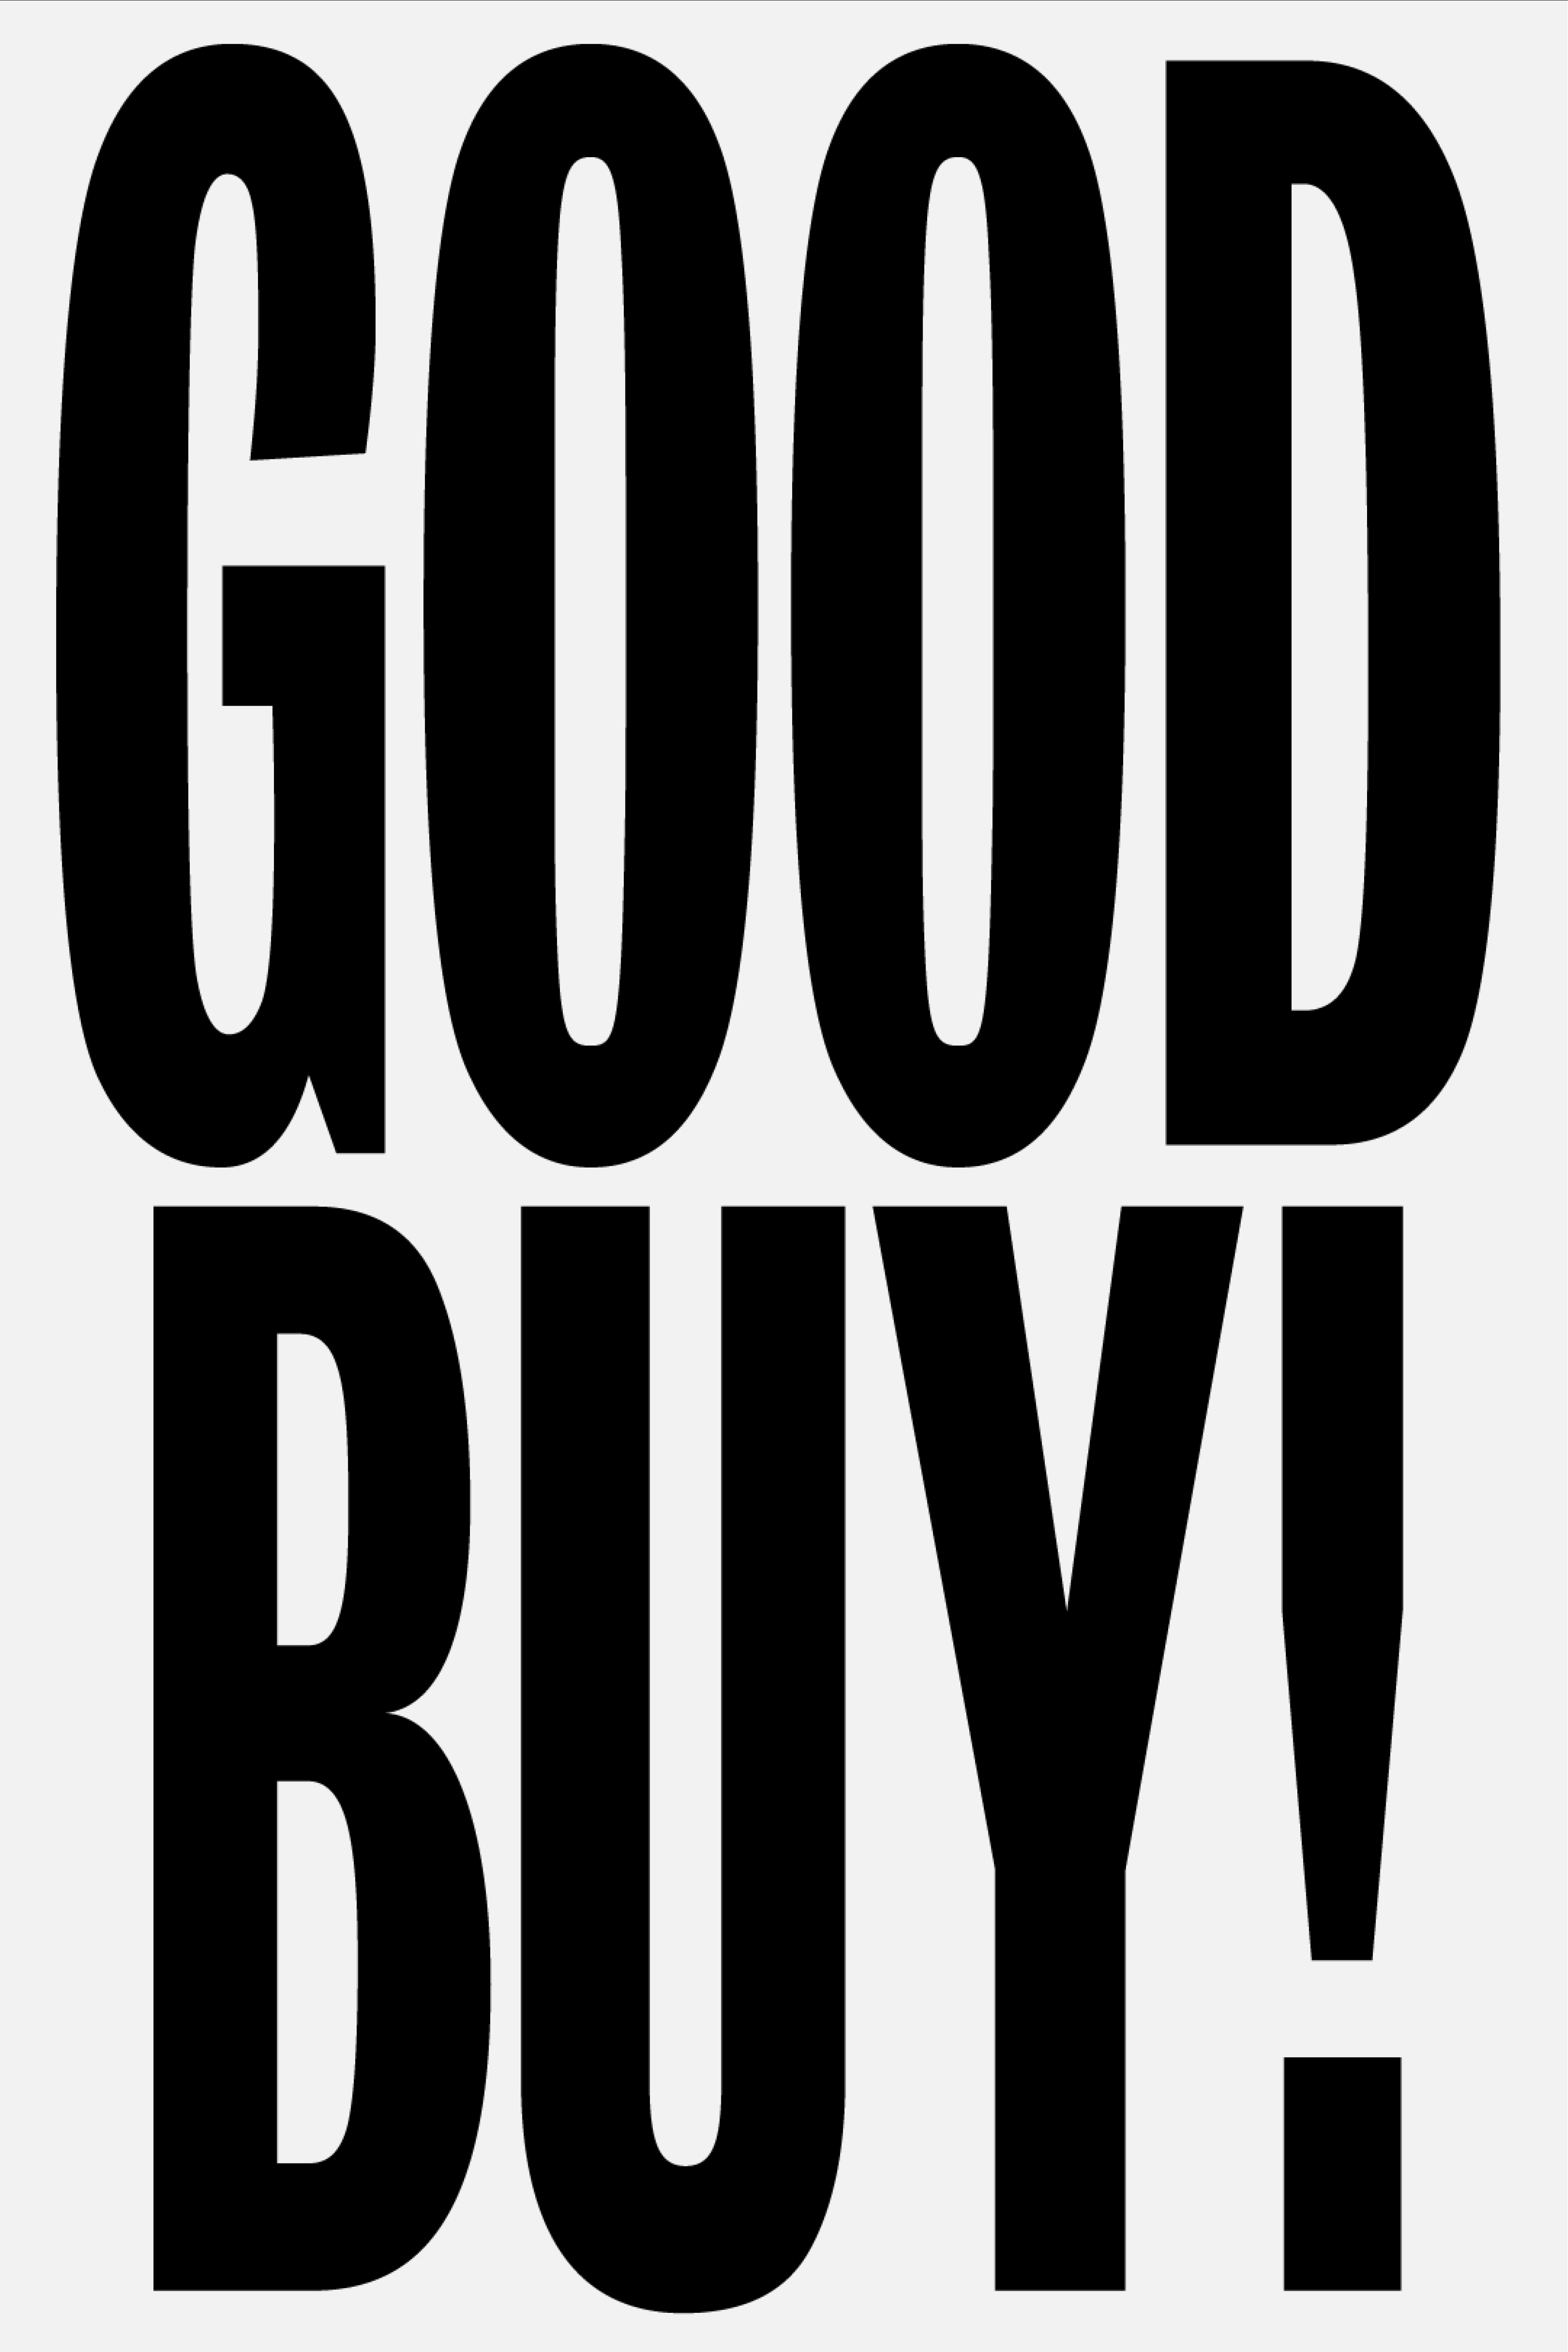 "Good Buy!" set in big black letters on a ligth grey background.